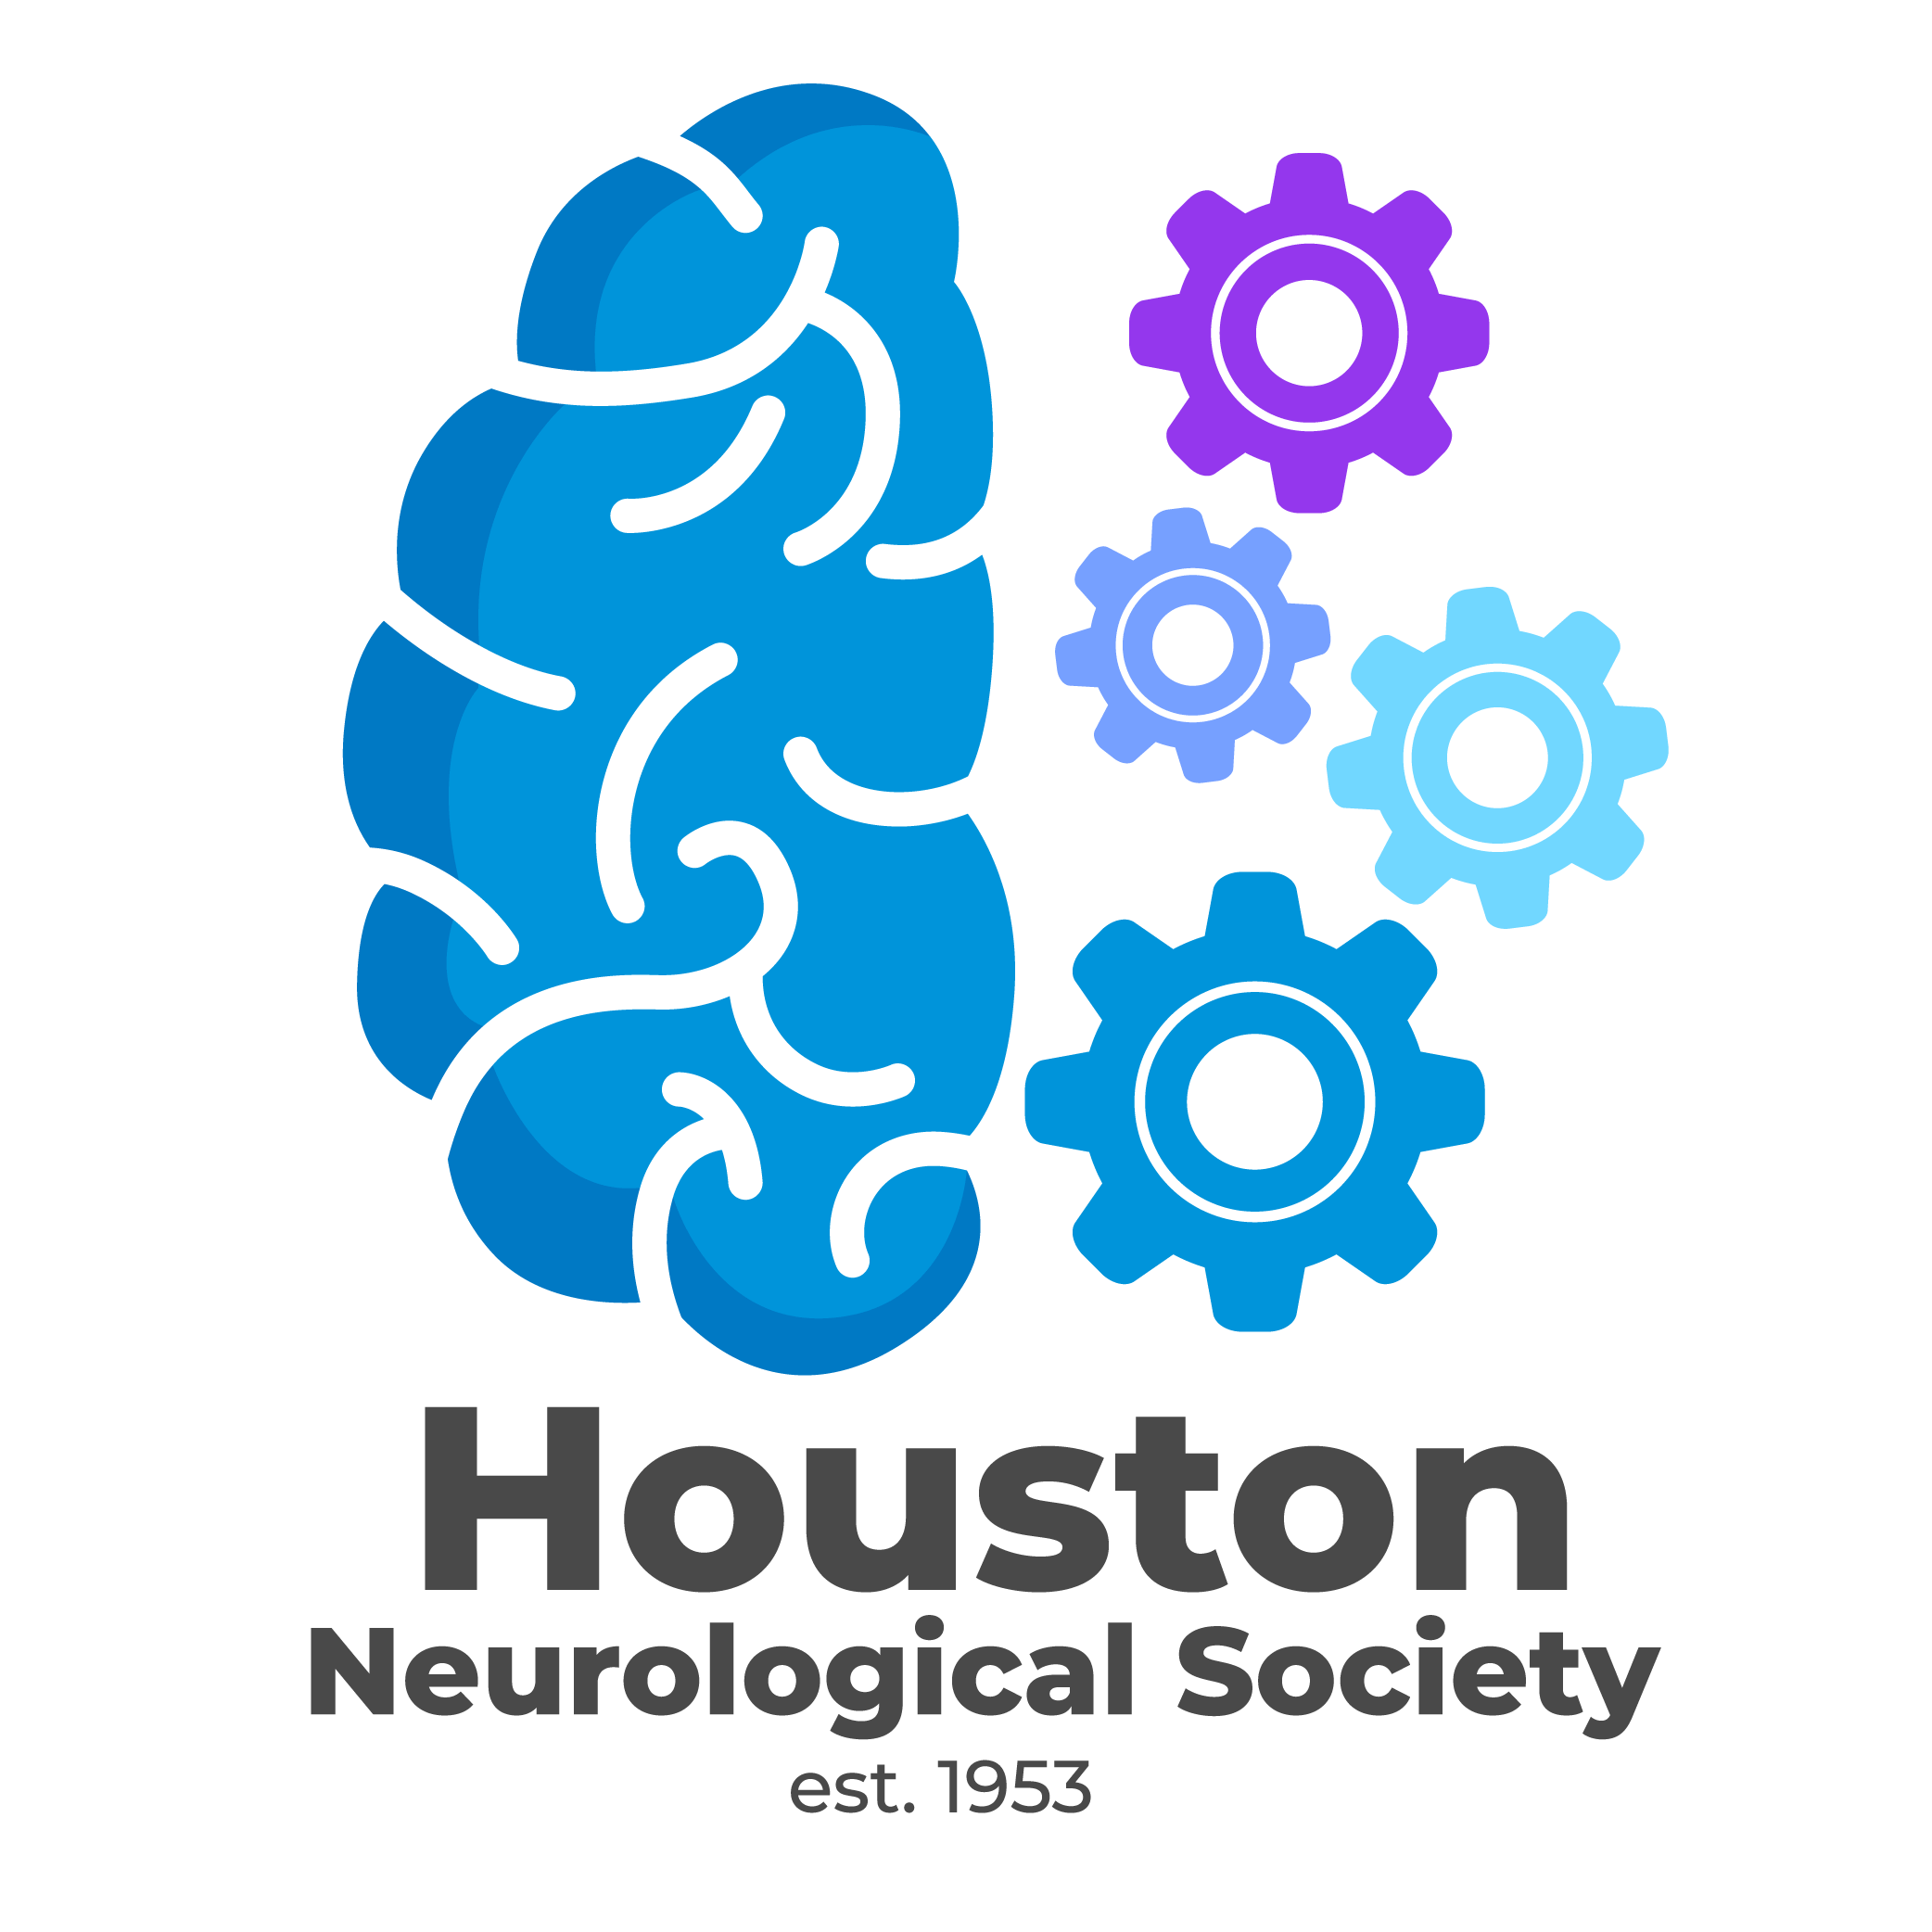 Houston Neurological Society logo